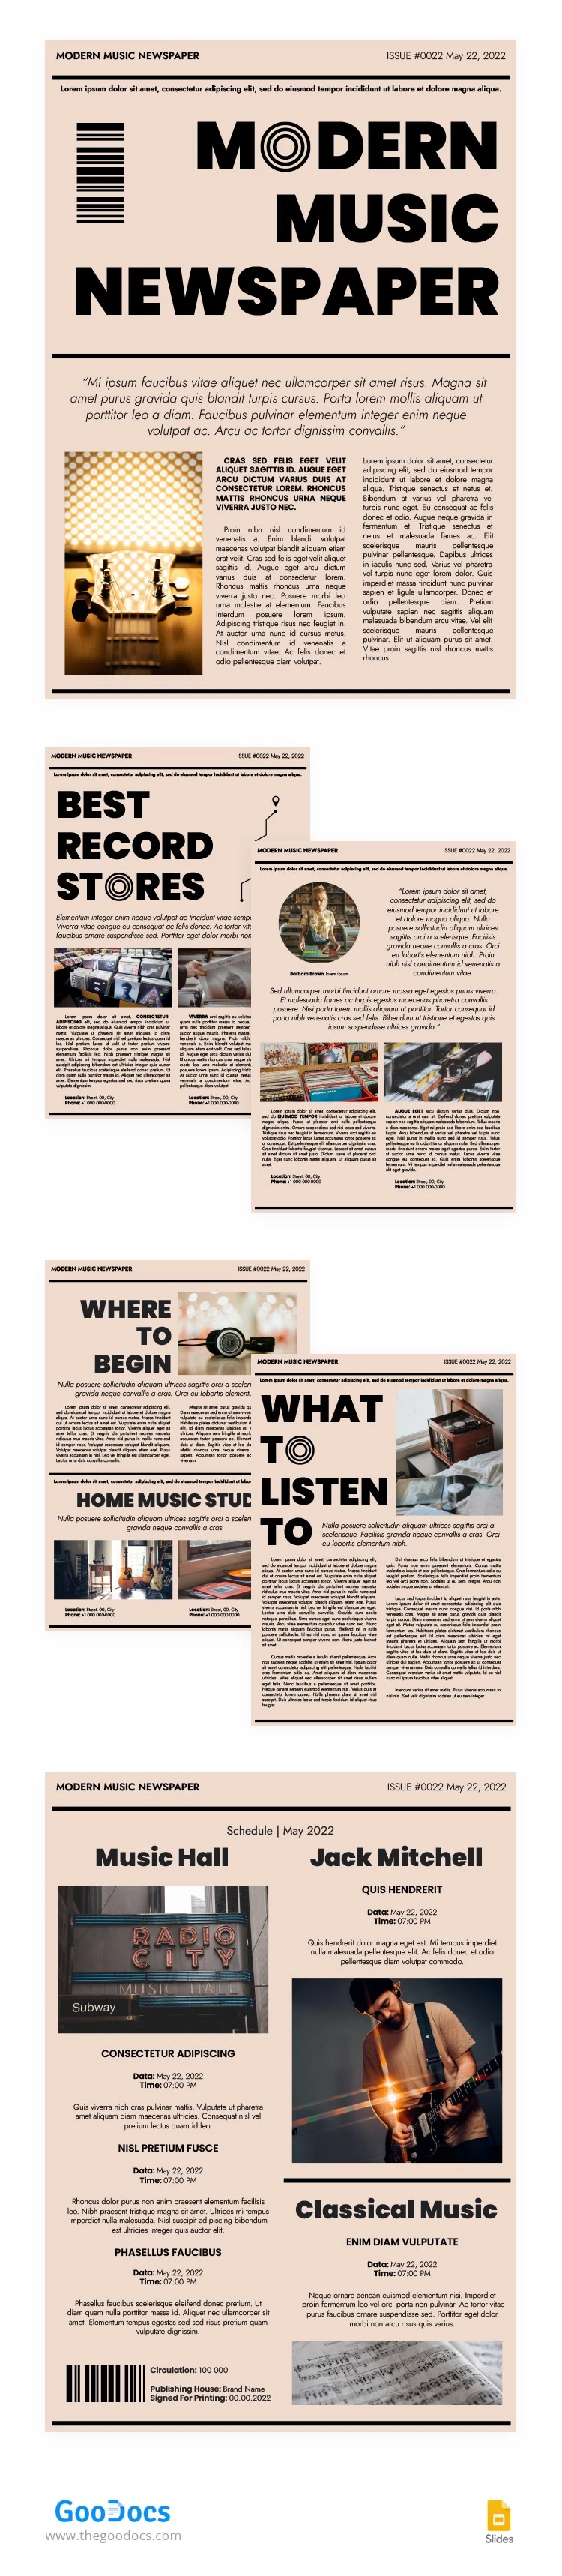 Modern Music Newspaper - free Google Docs Template - 10063158